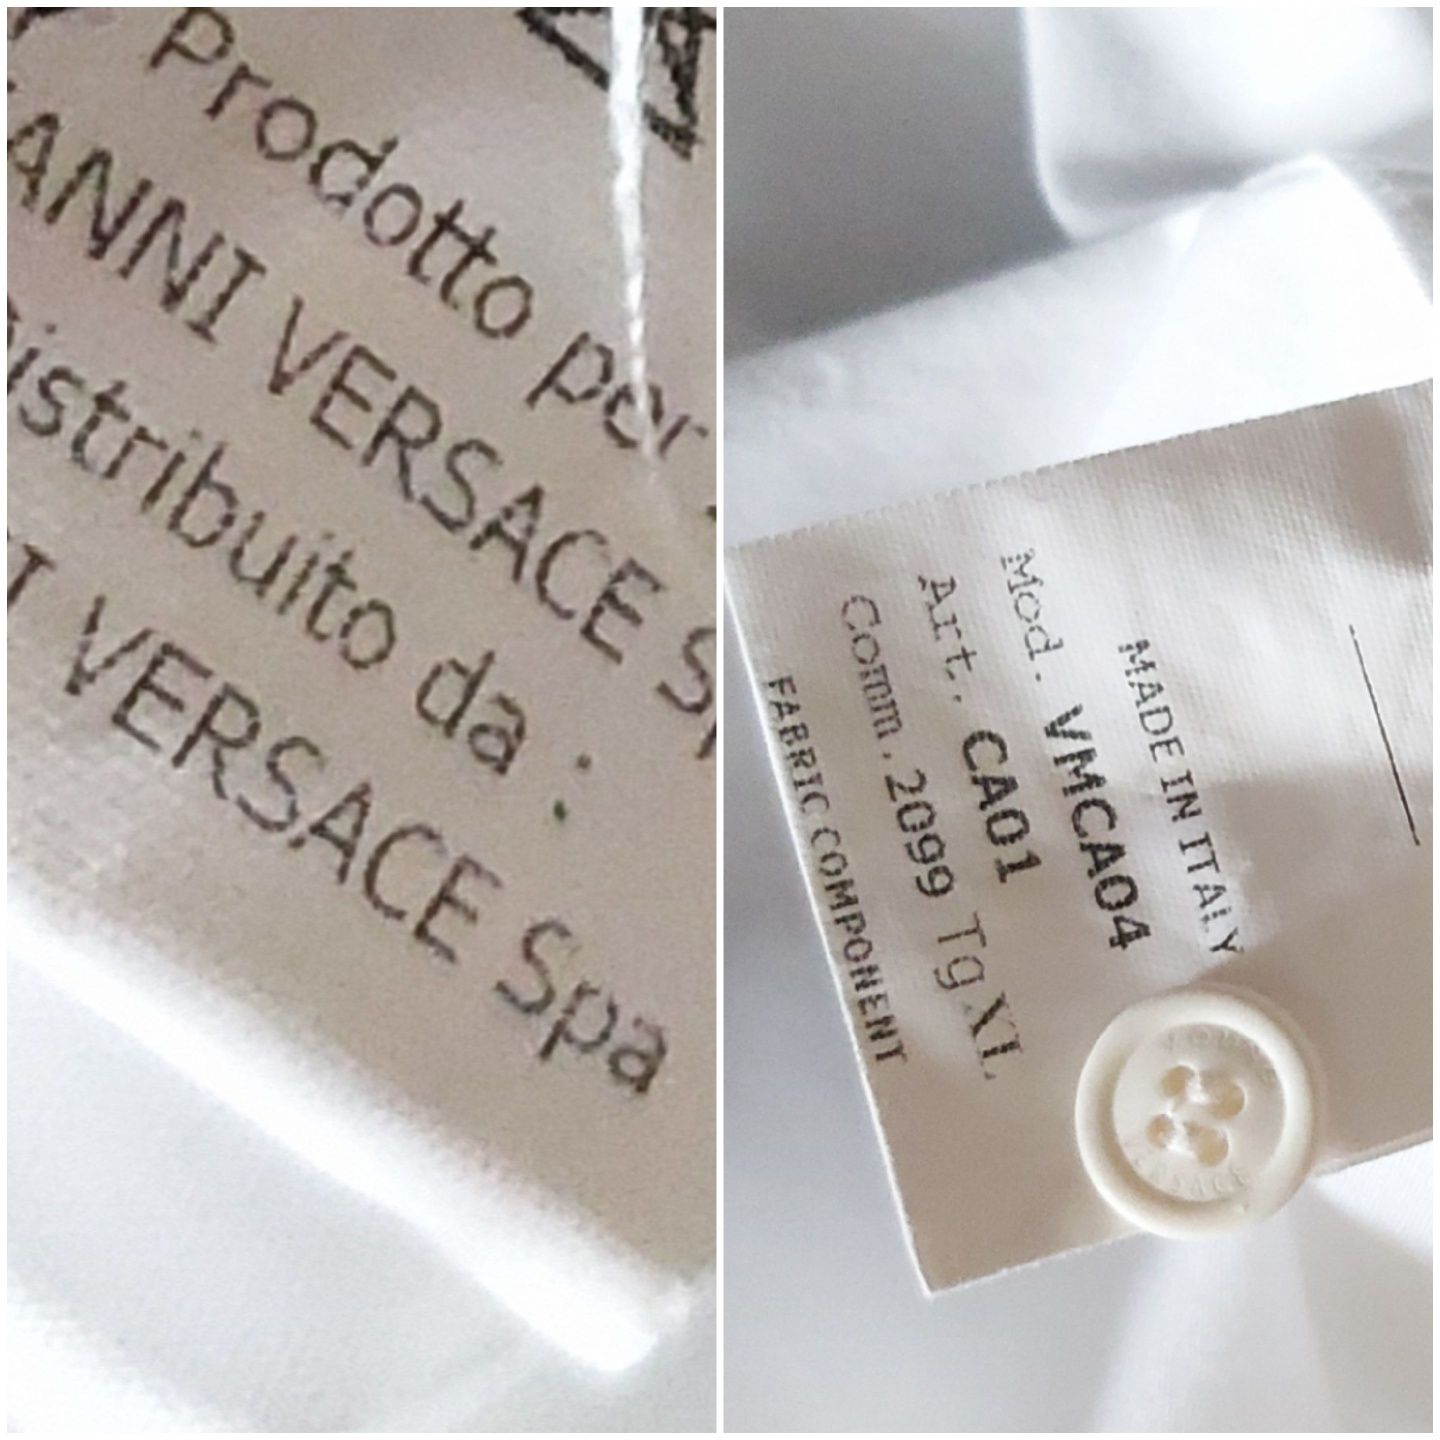 Versace jung koszula biała XS/S  taliowana jak nowa